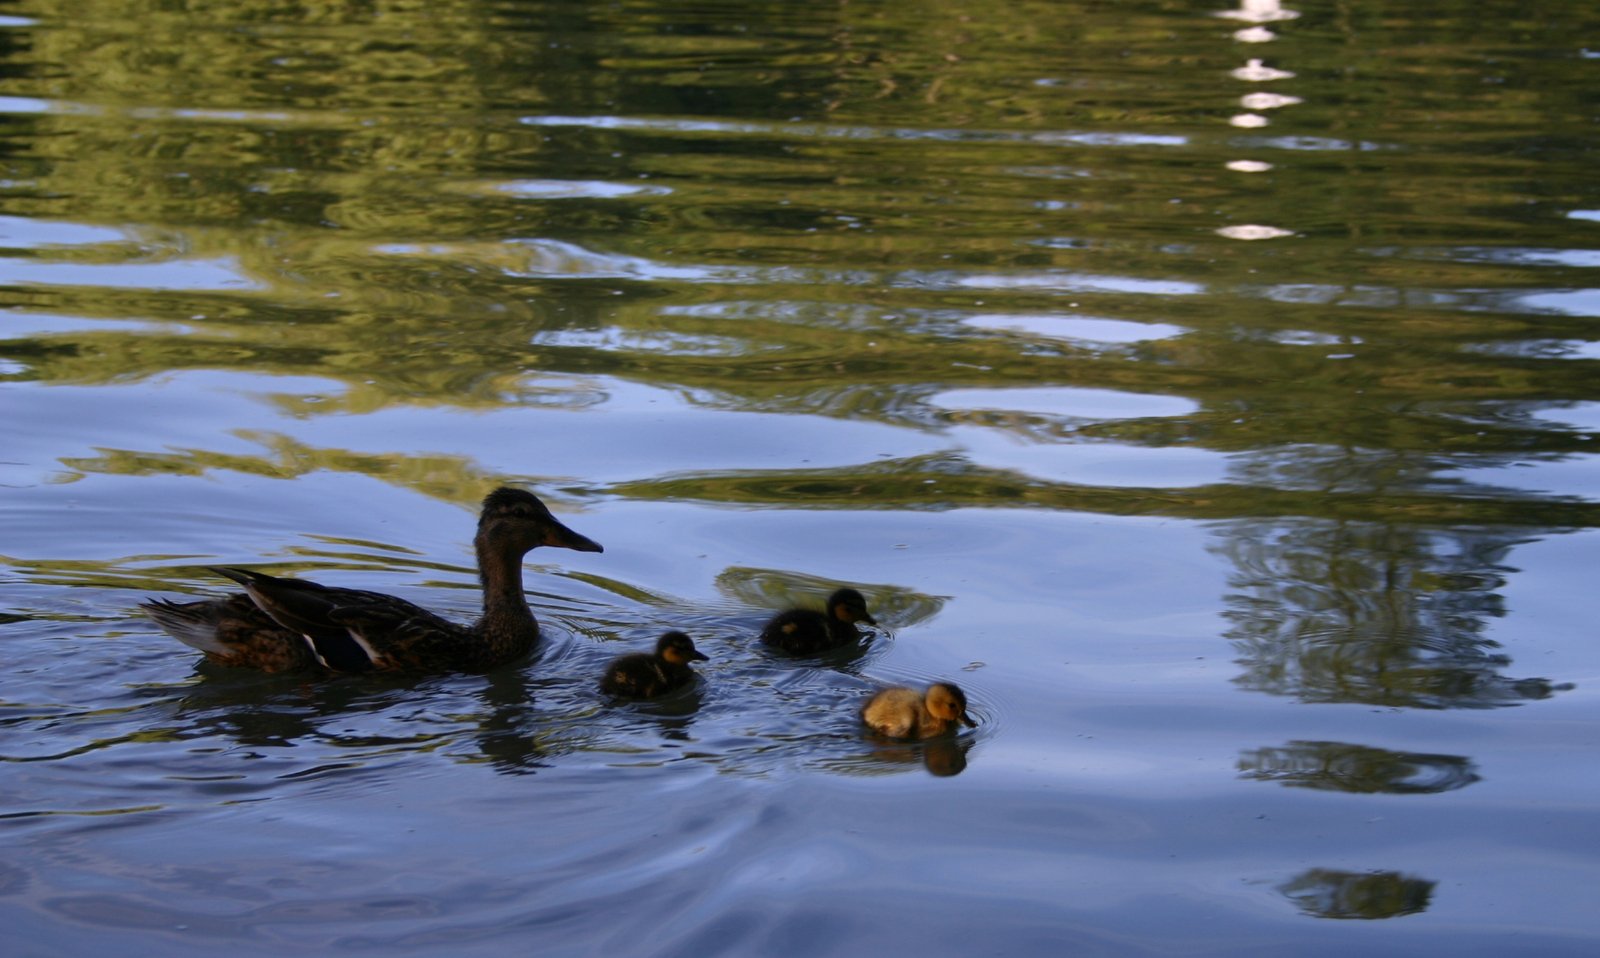 three ducks swimming on top of a lake